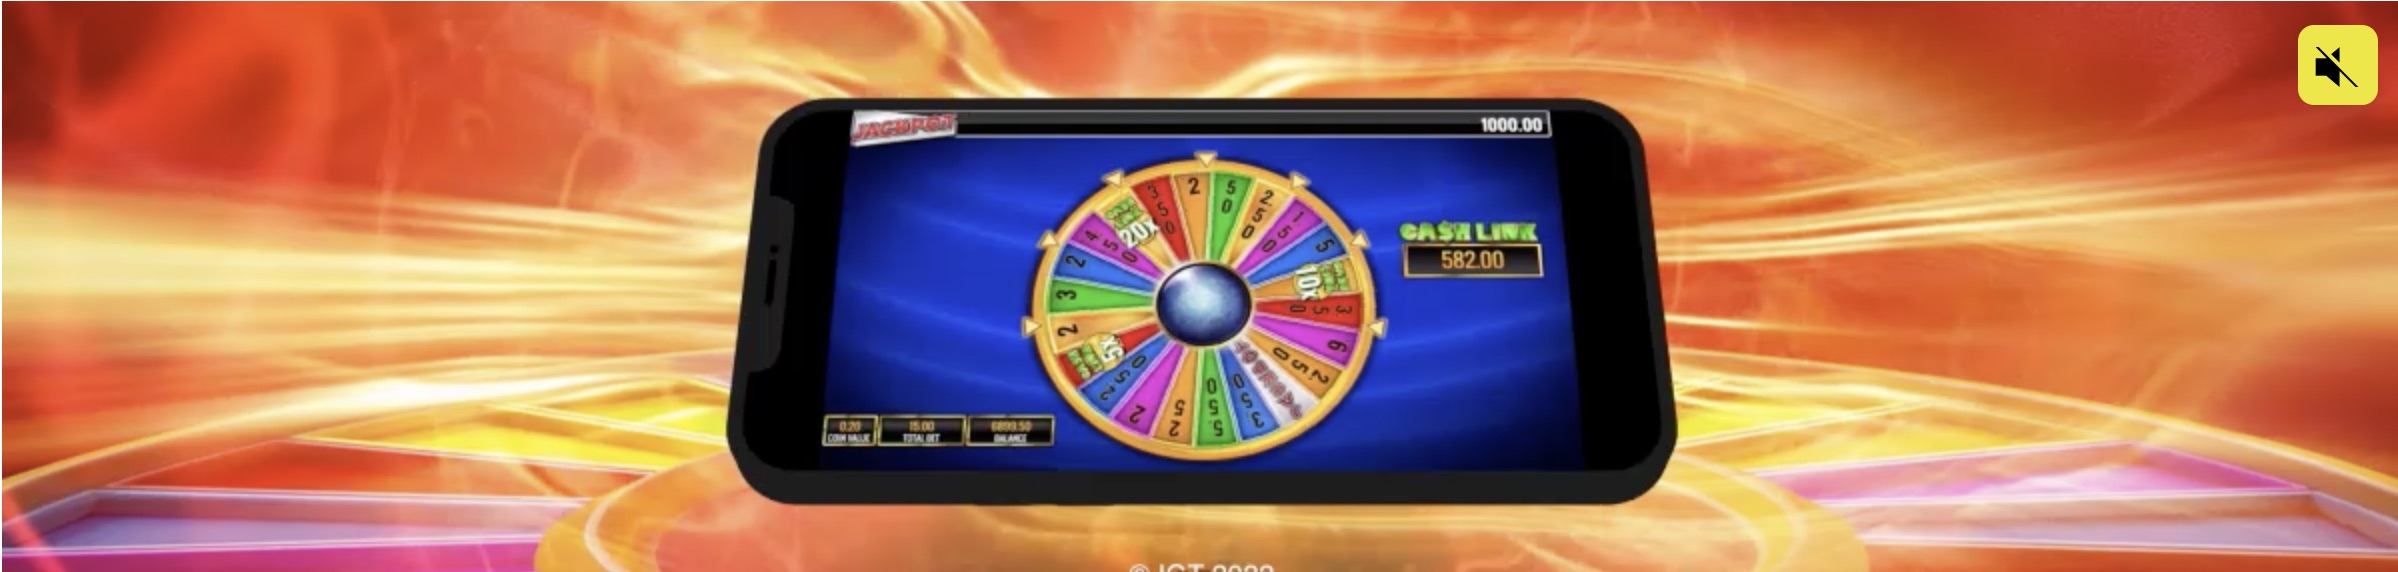 Wheel of Fortune Online Casino